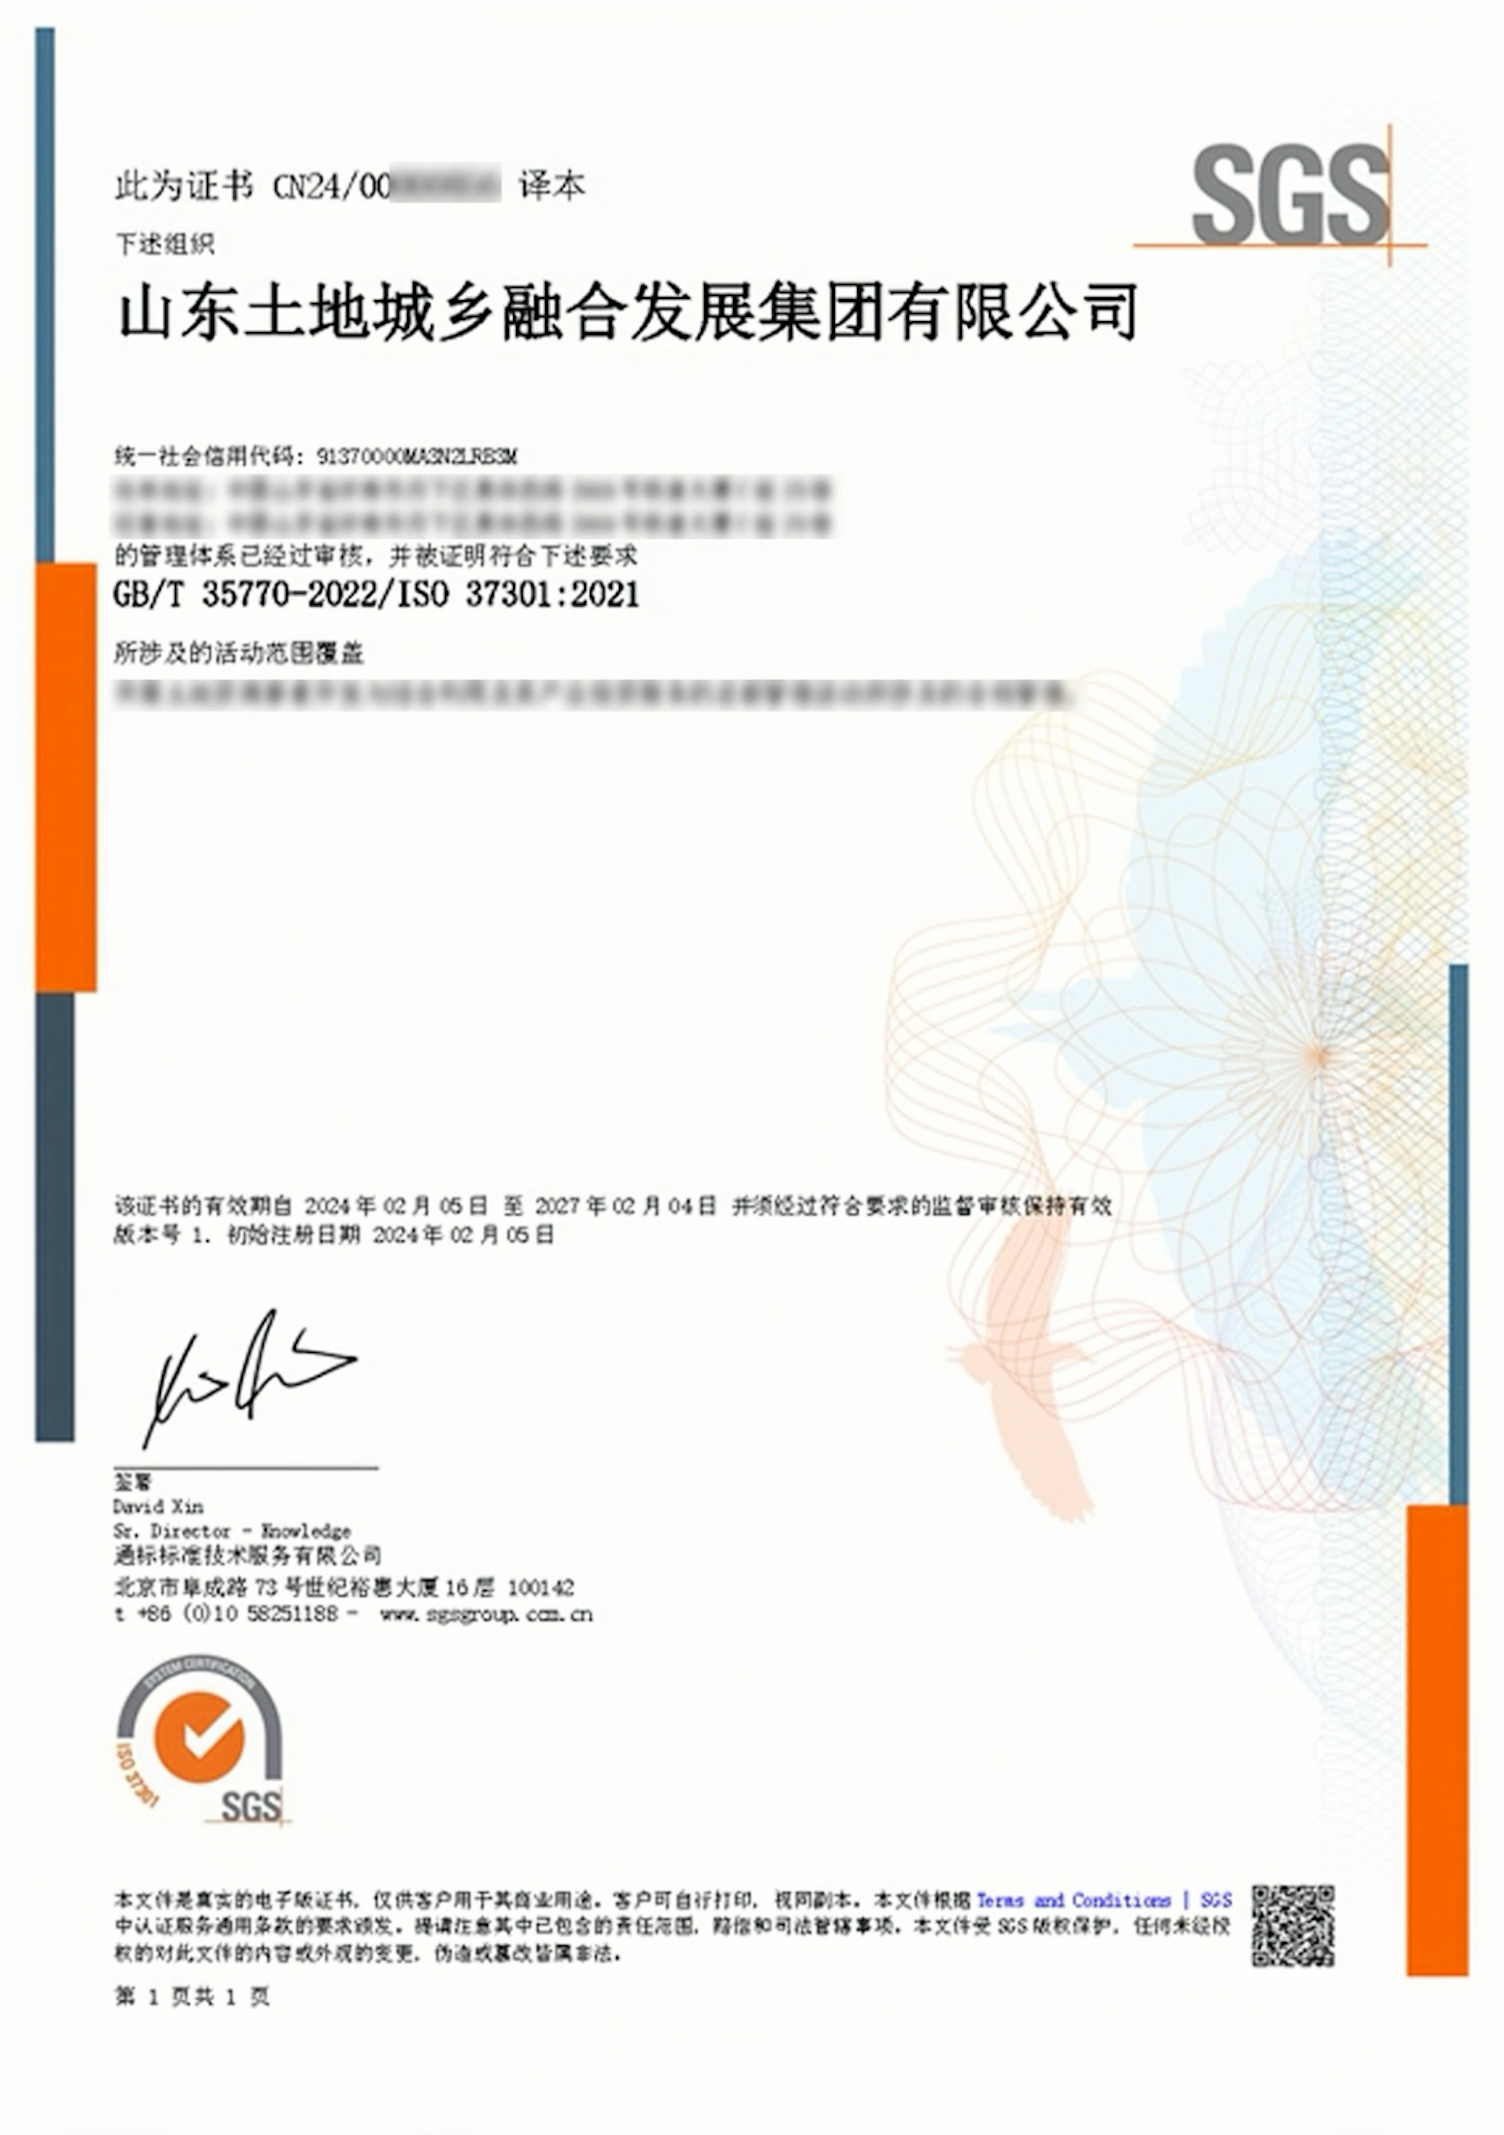 SGS为山东土地城乡融合发展集团颁发合规管理体系认证证书